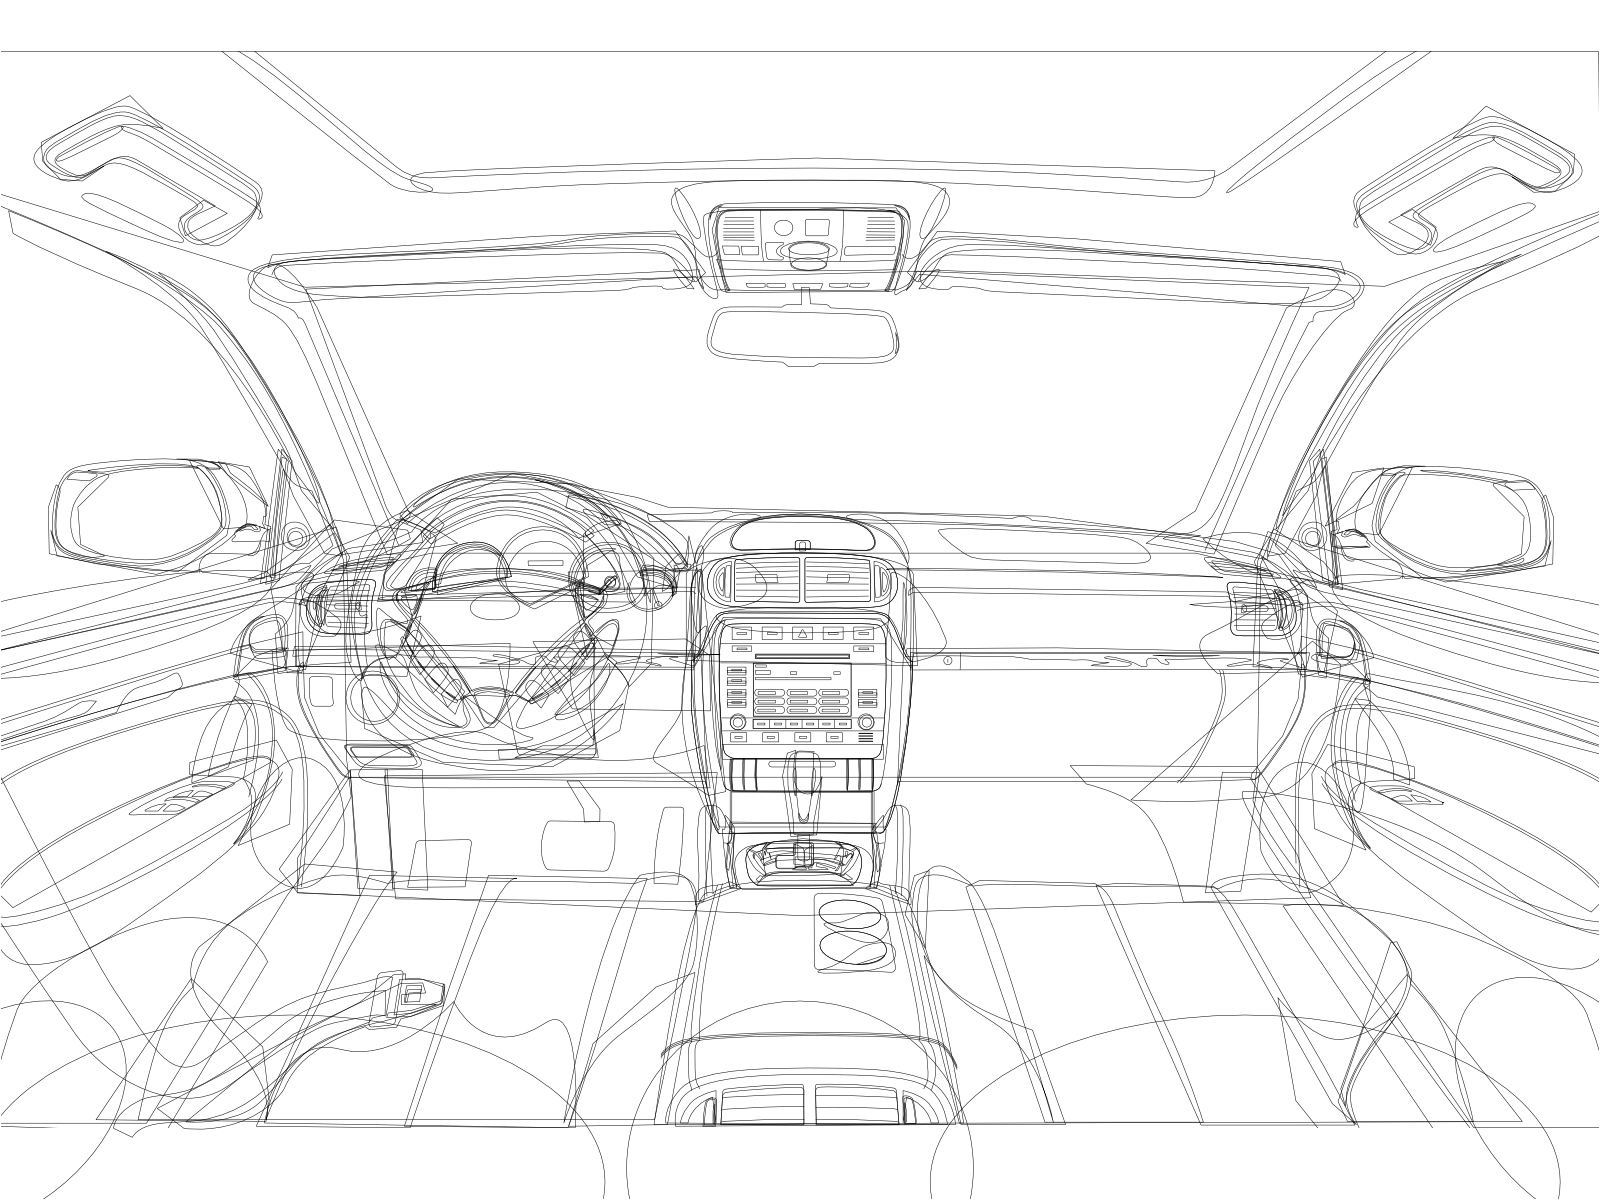 GM Design Sketch Hints At Future Chevy Sports Car Interior